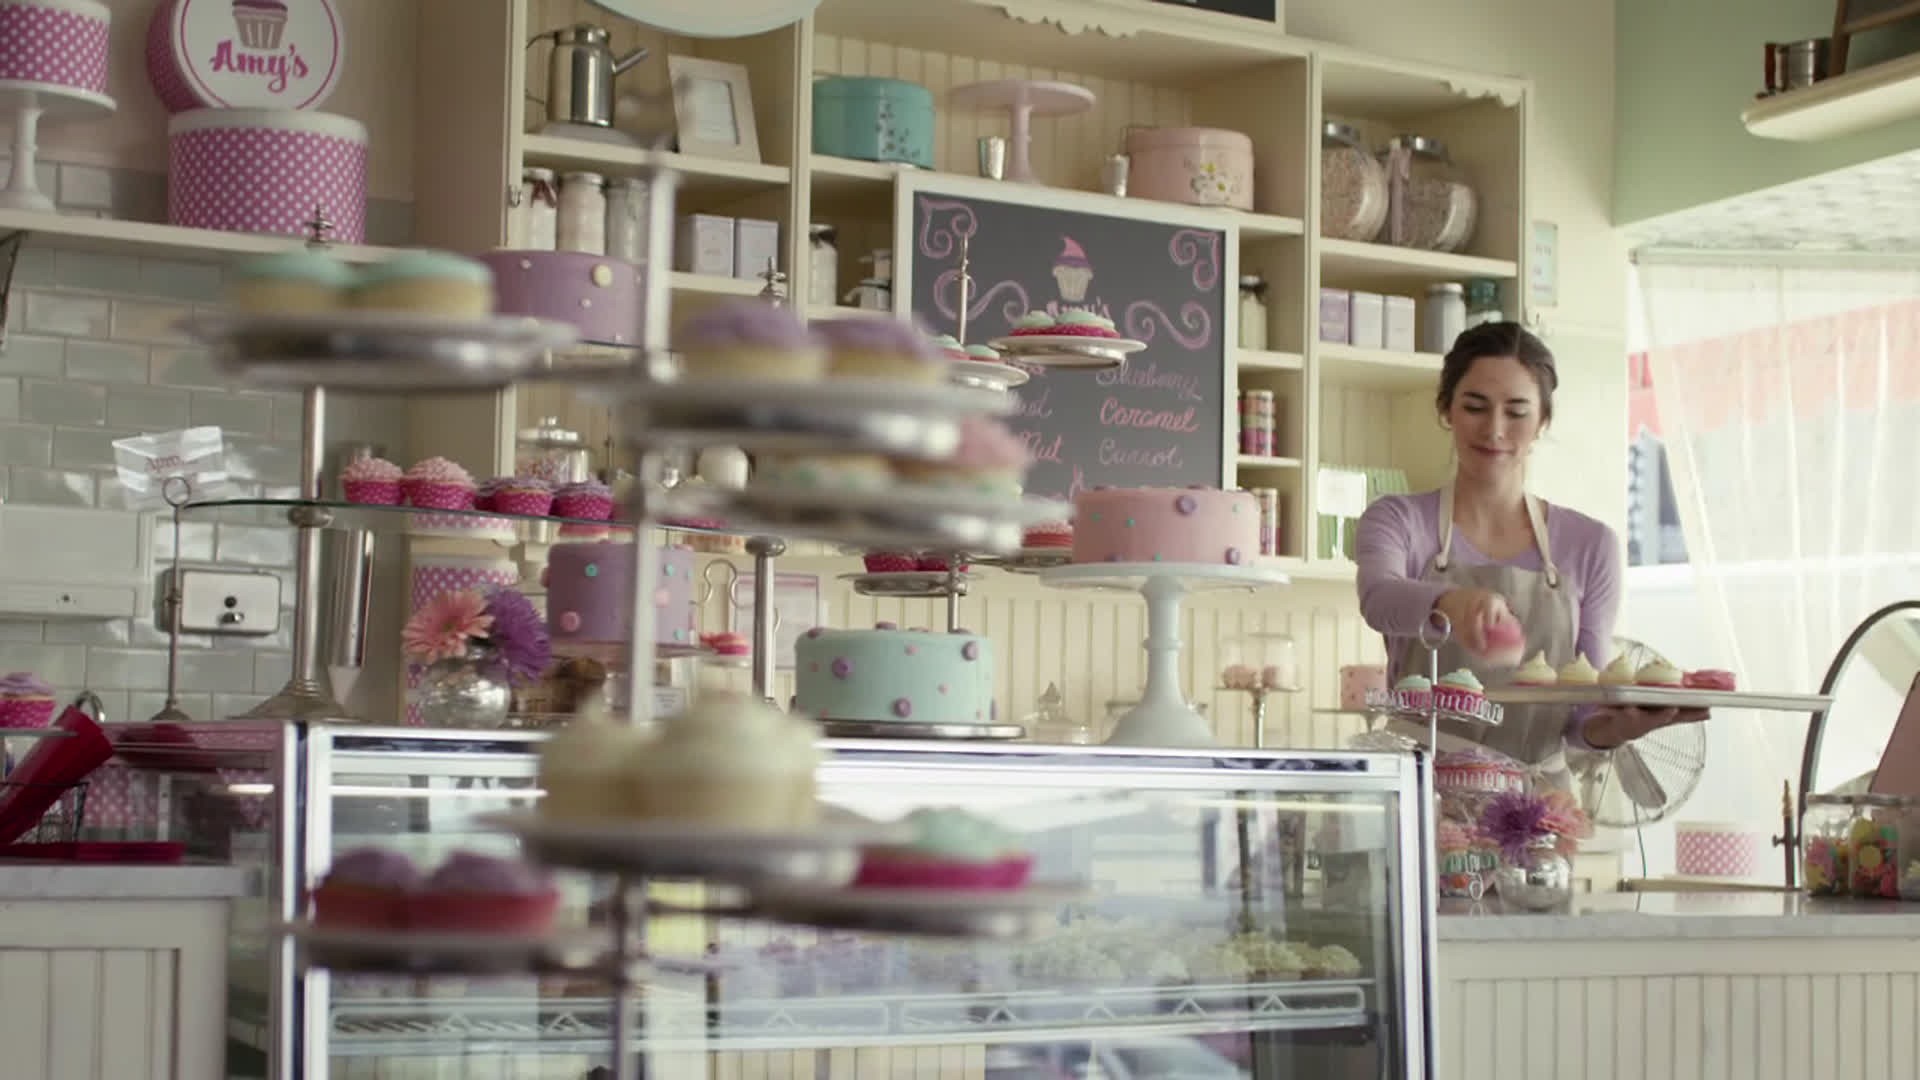 Aczone Commercial 'Amy's Bakery'